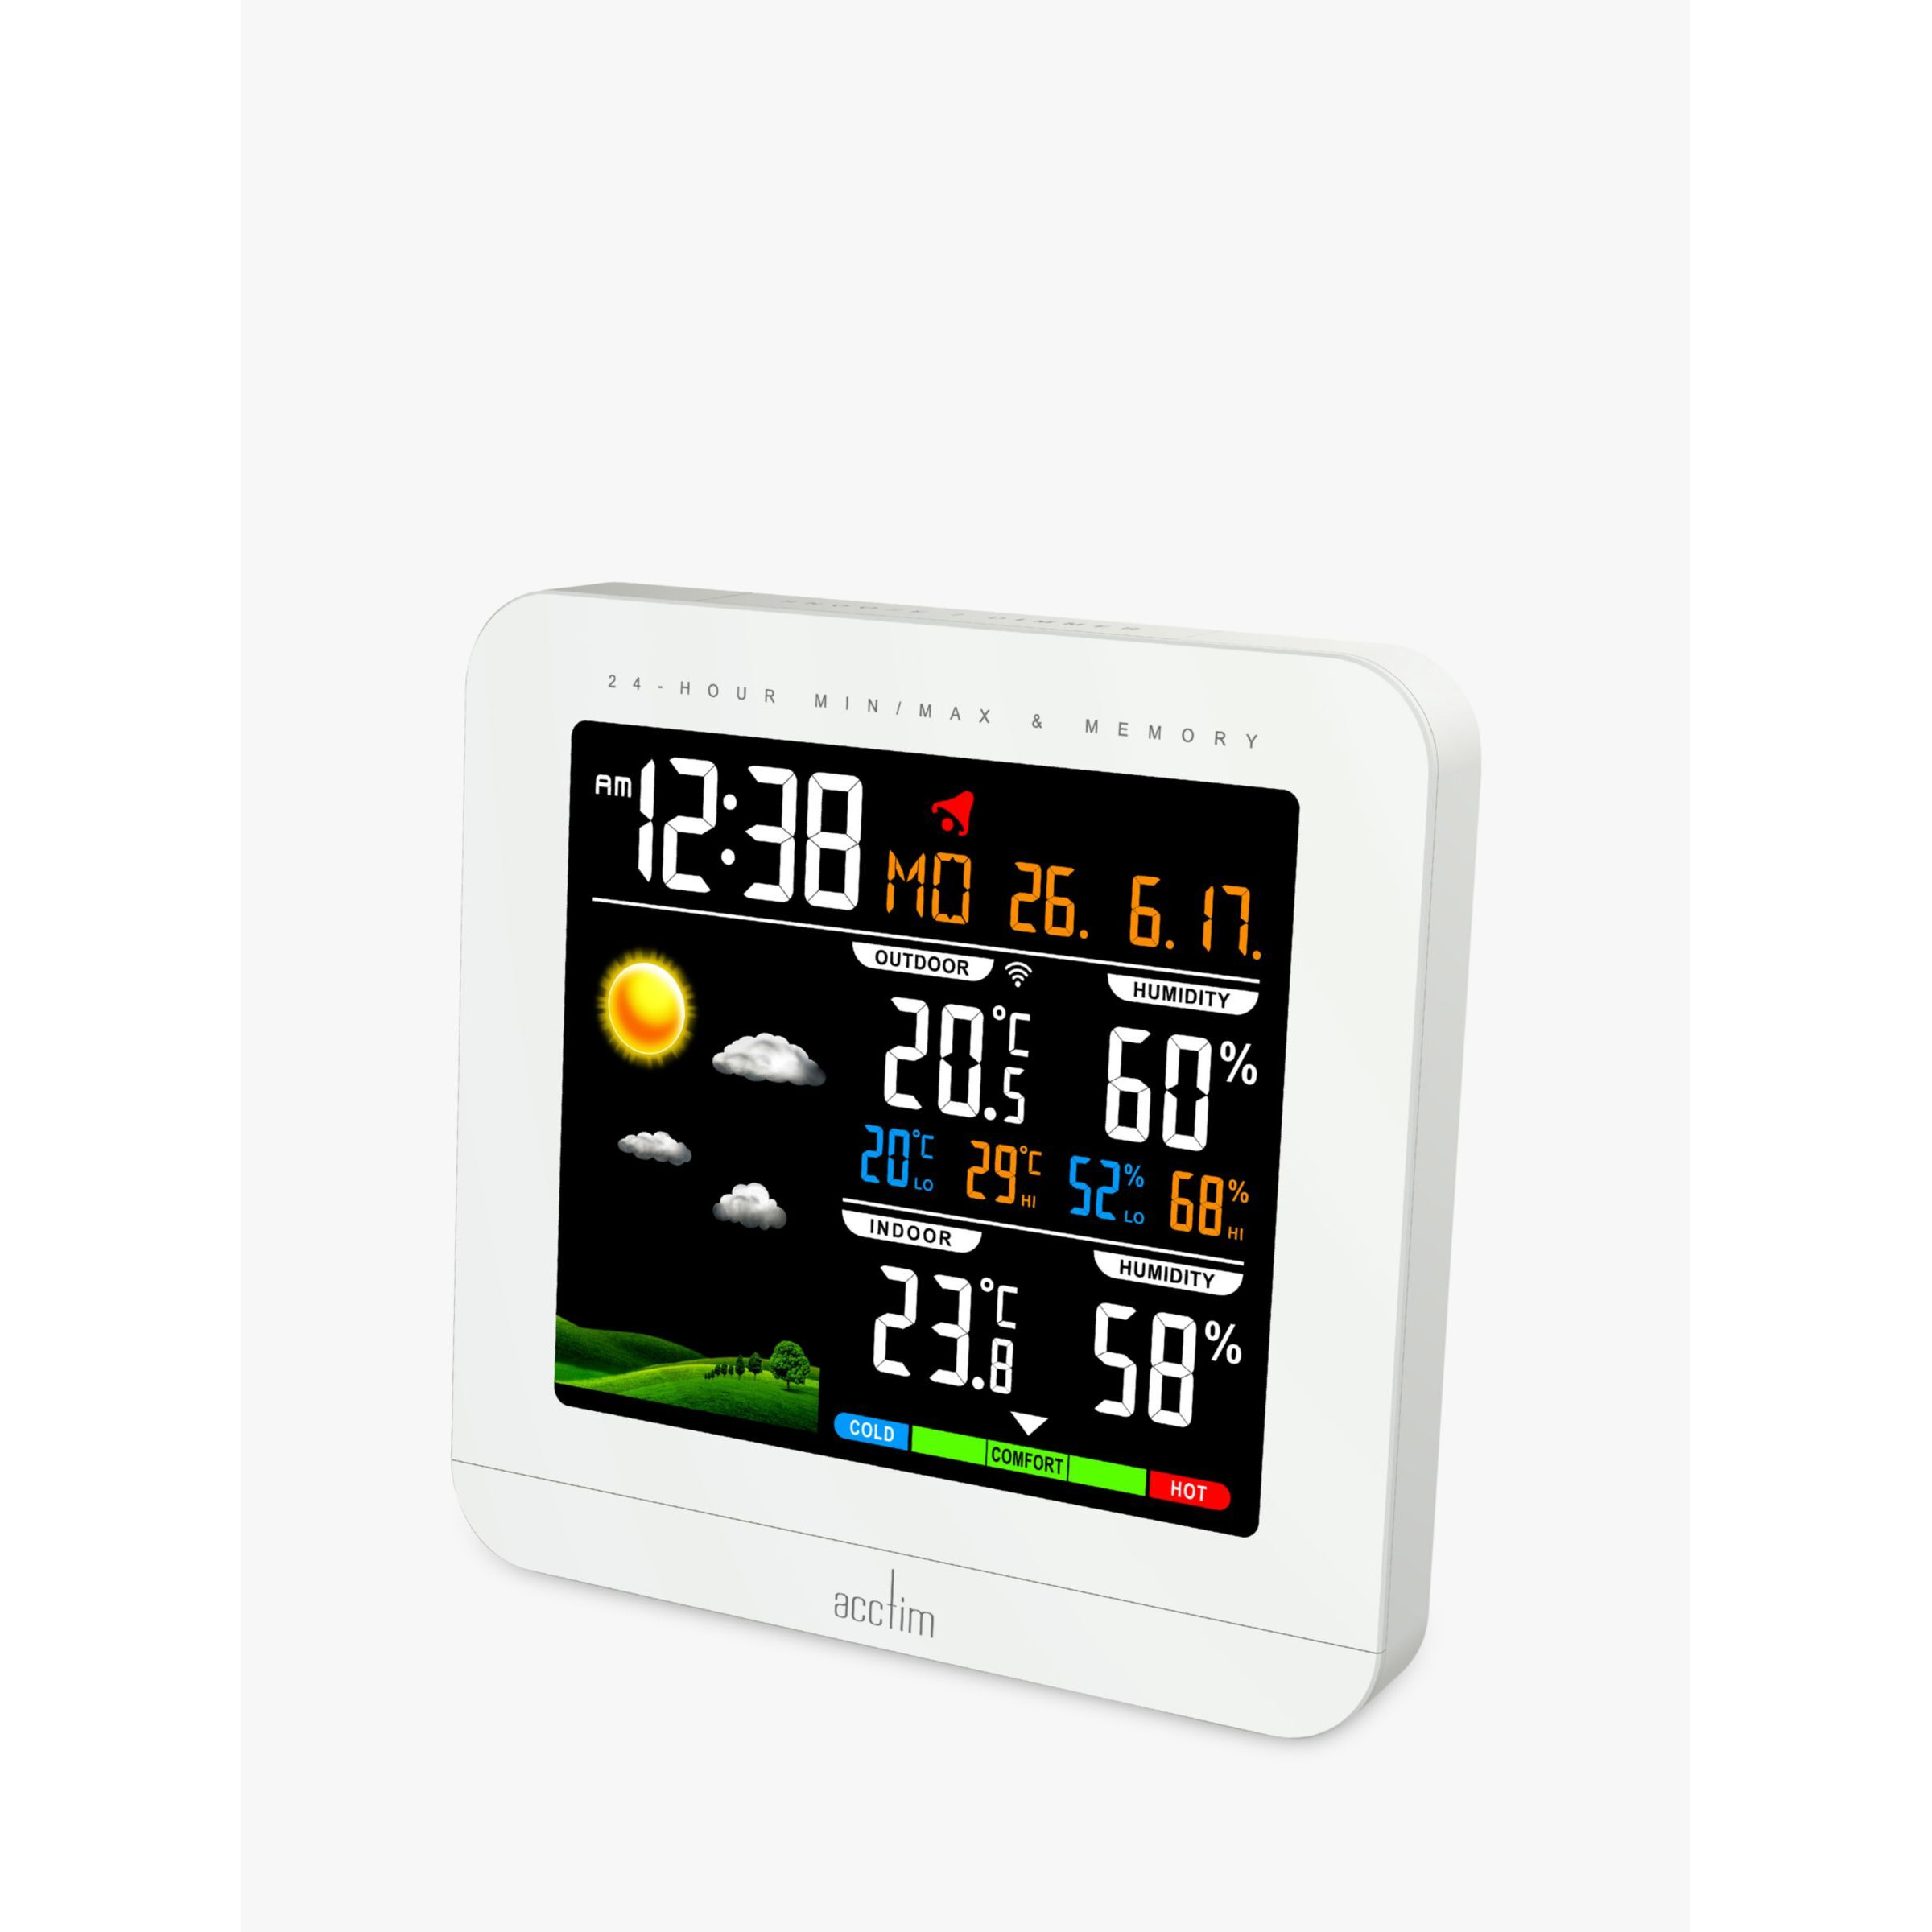 Acctim Wyndham Weather Station Digital Alarm Clock - image 1